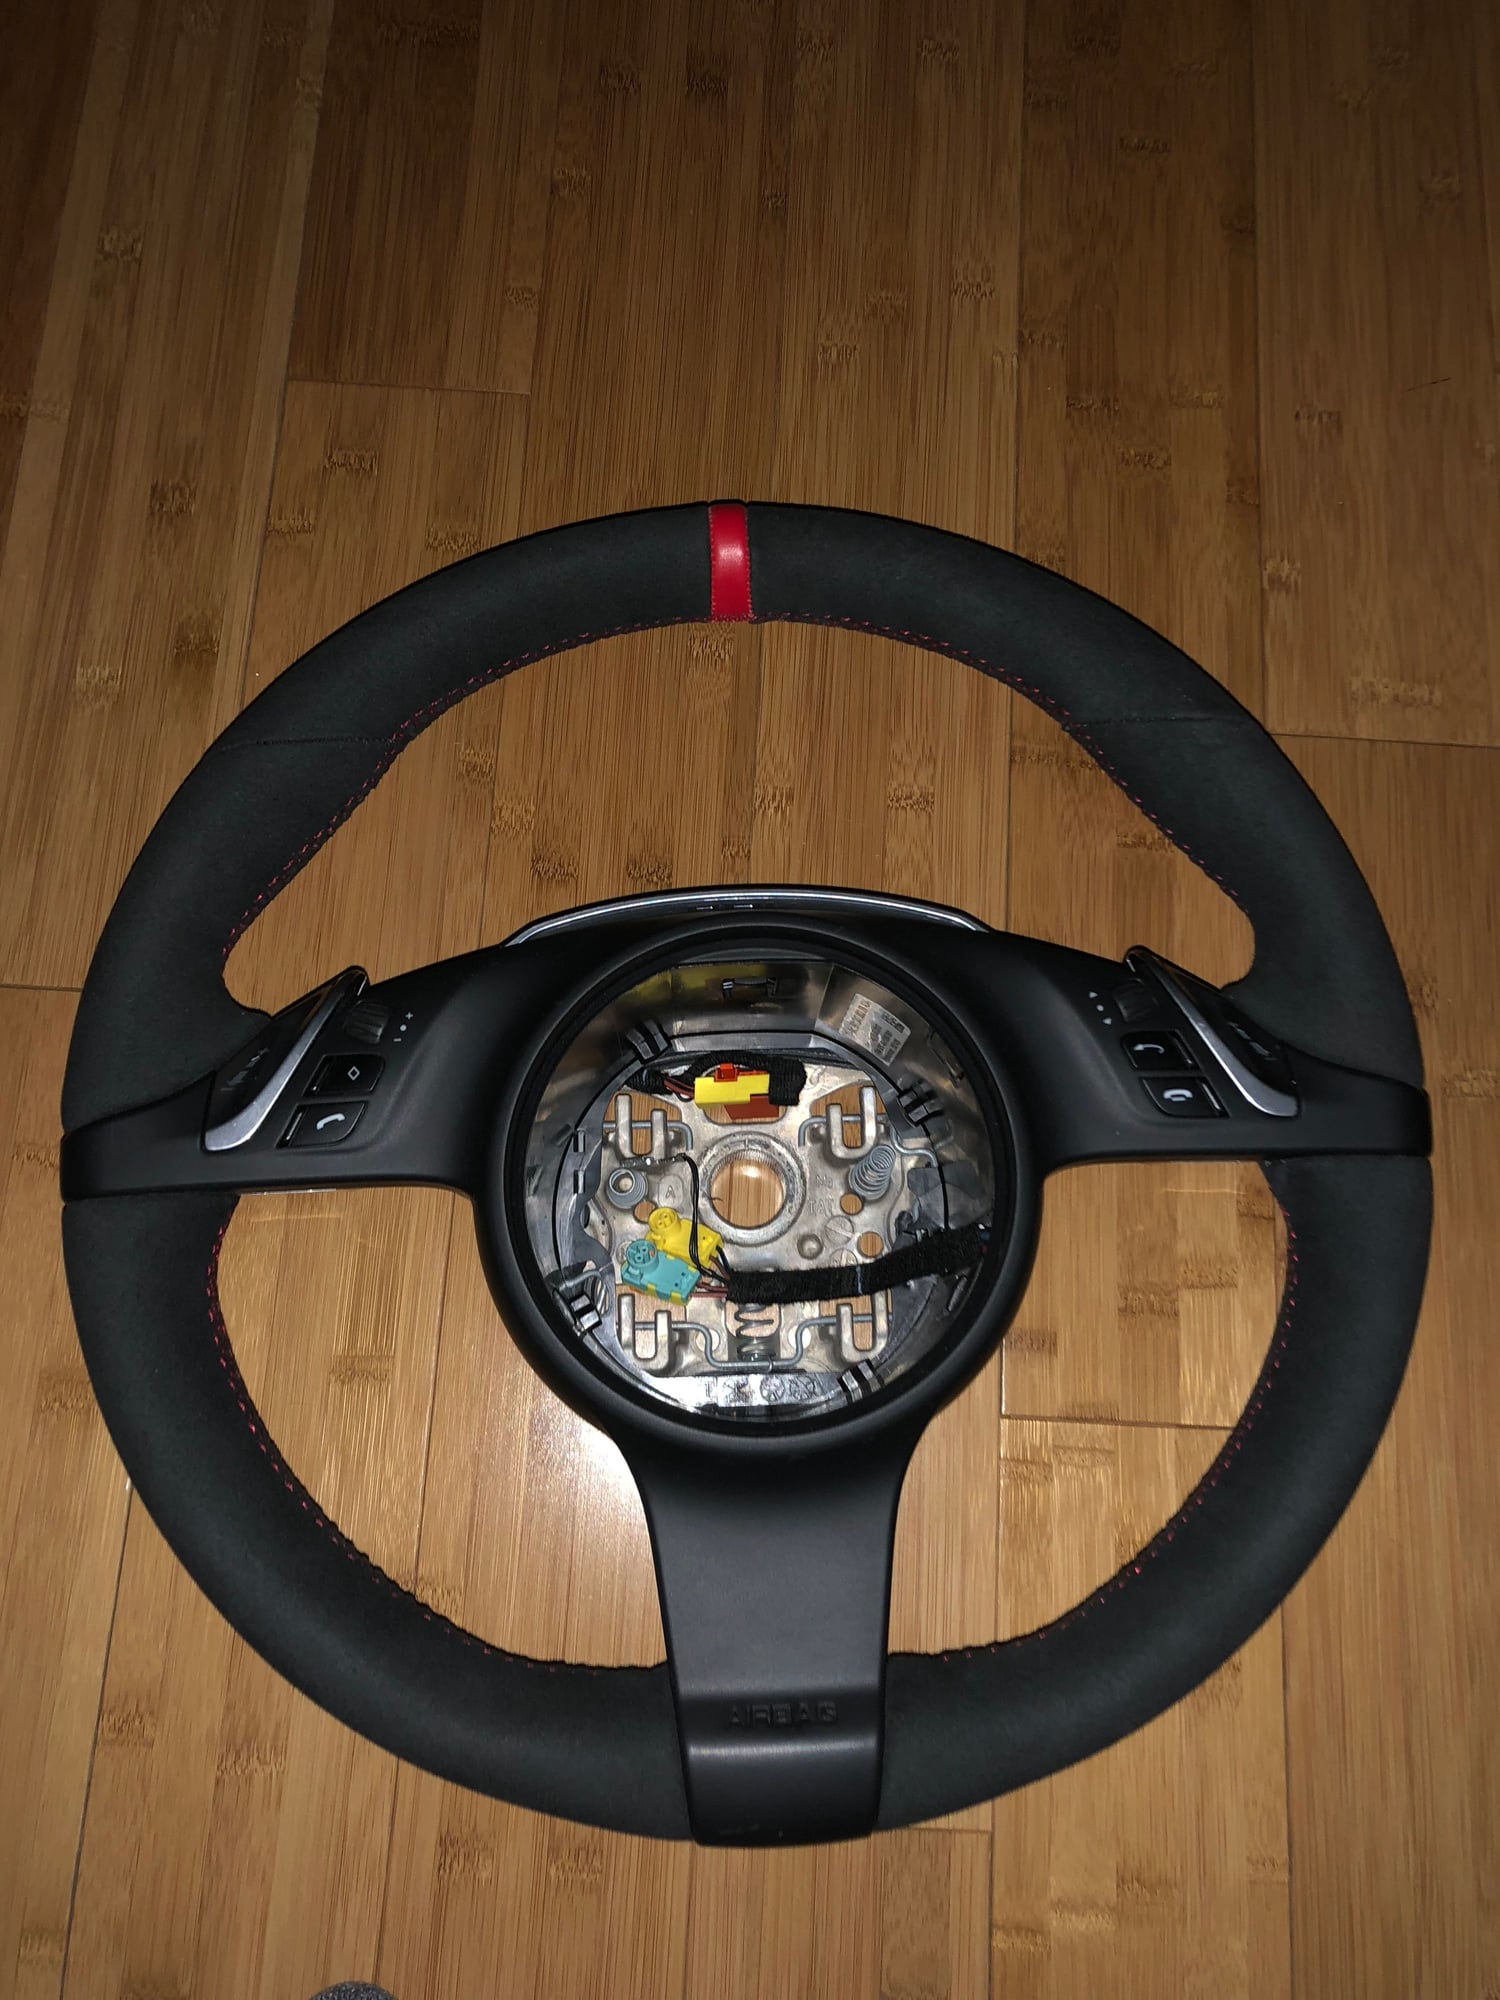 Interior/Upholstery - 997/991 Alcantara steering wheel PDK - Used - 2008 to 2016 Porsche 911 - Philadelphia, PA 19115, United States